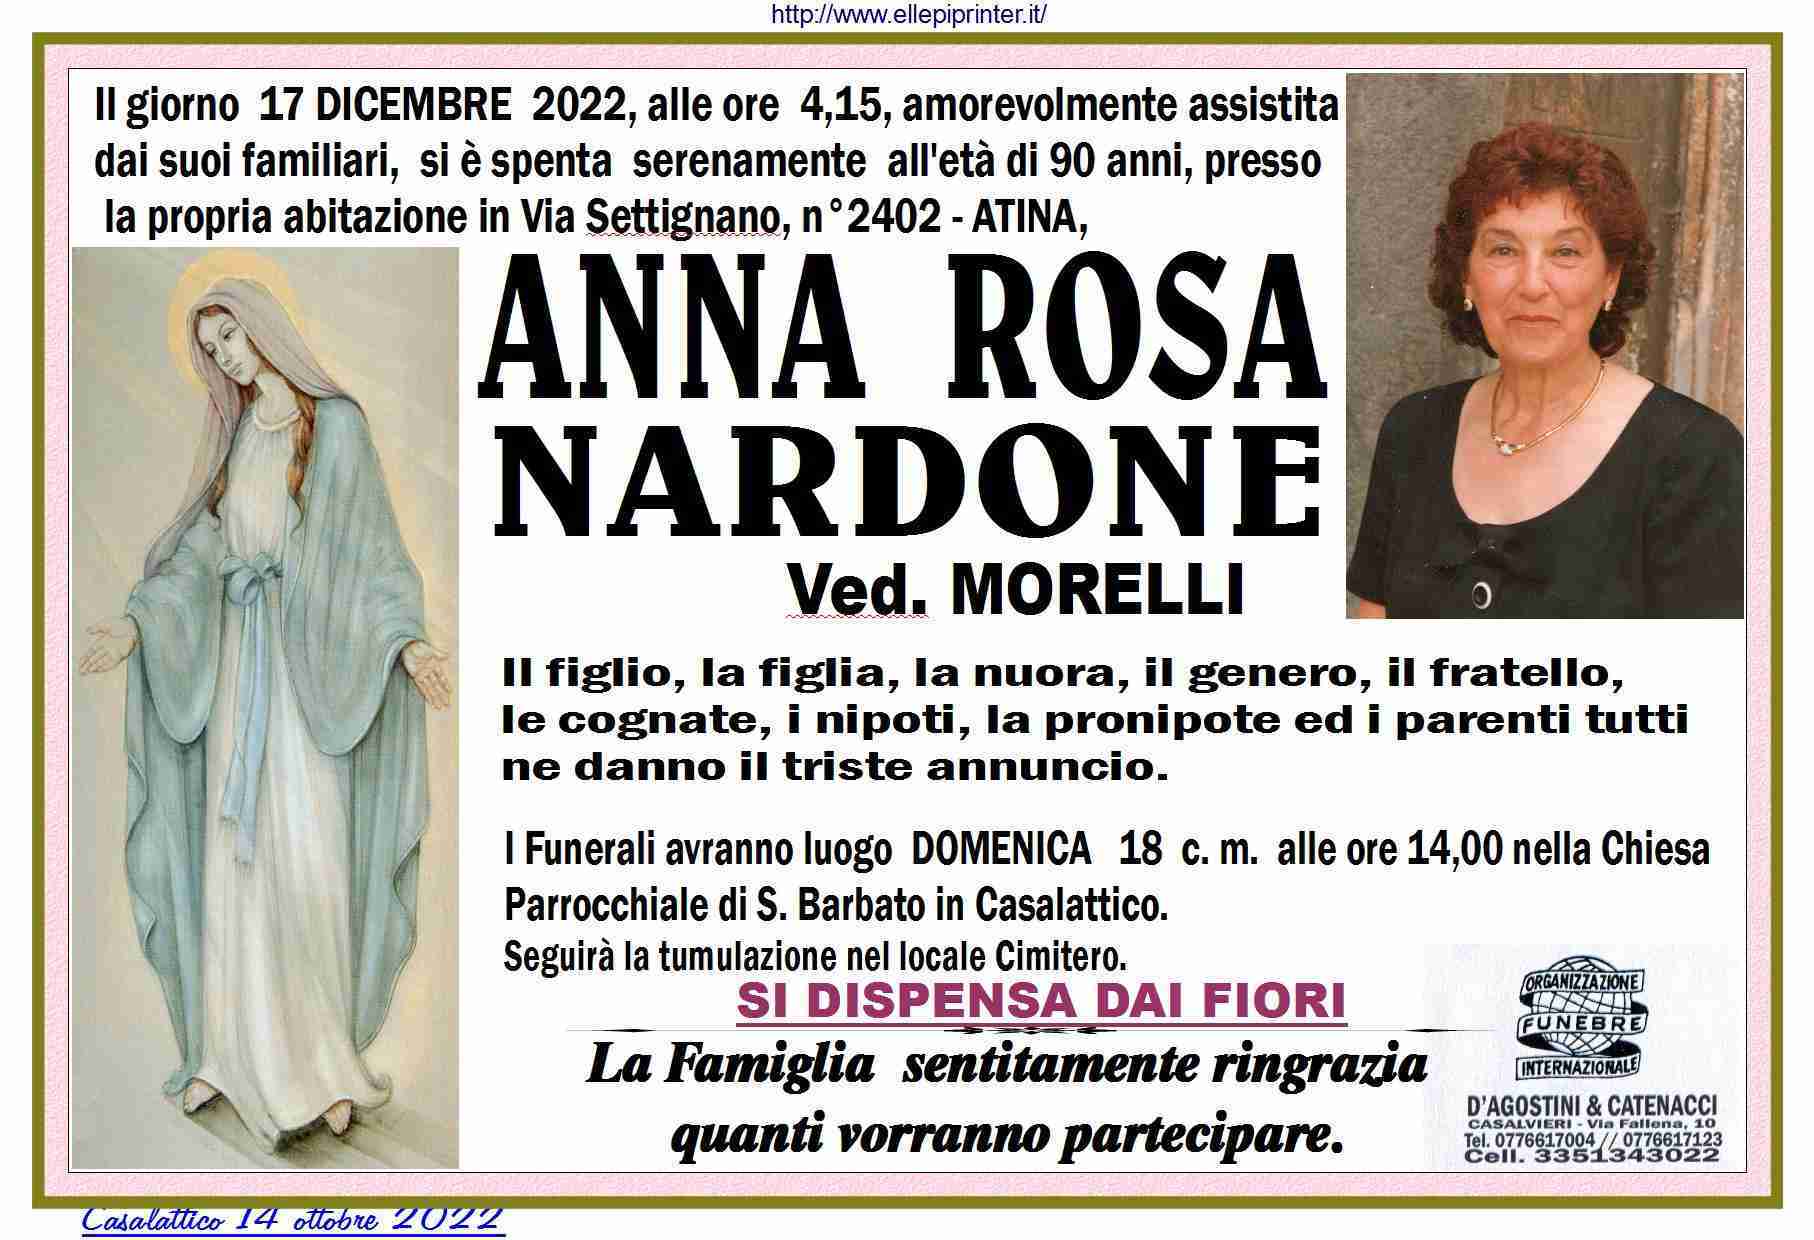 Anna Rosa Nardone